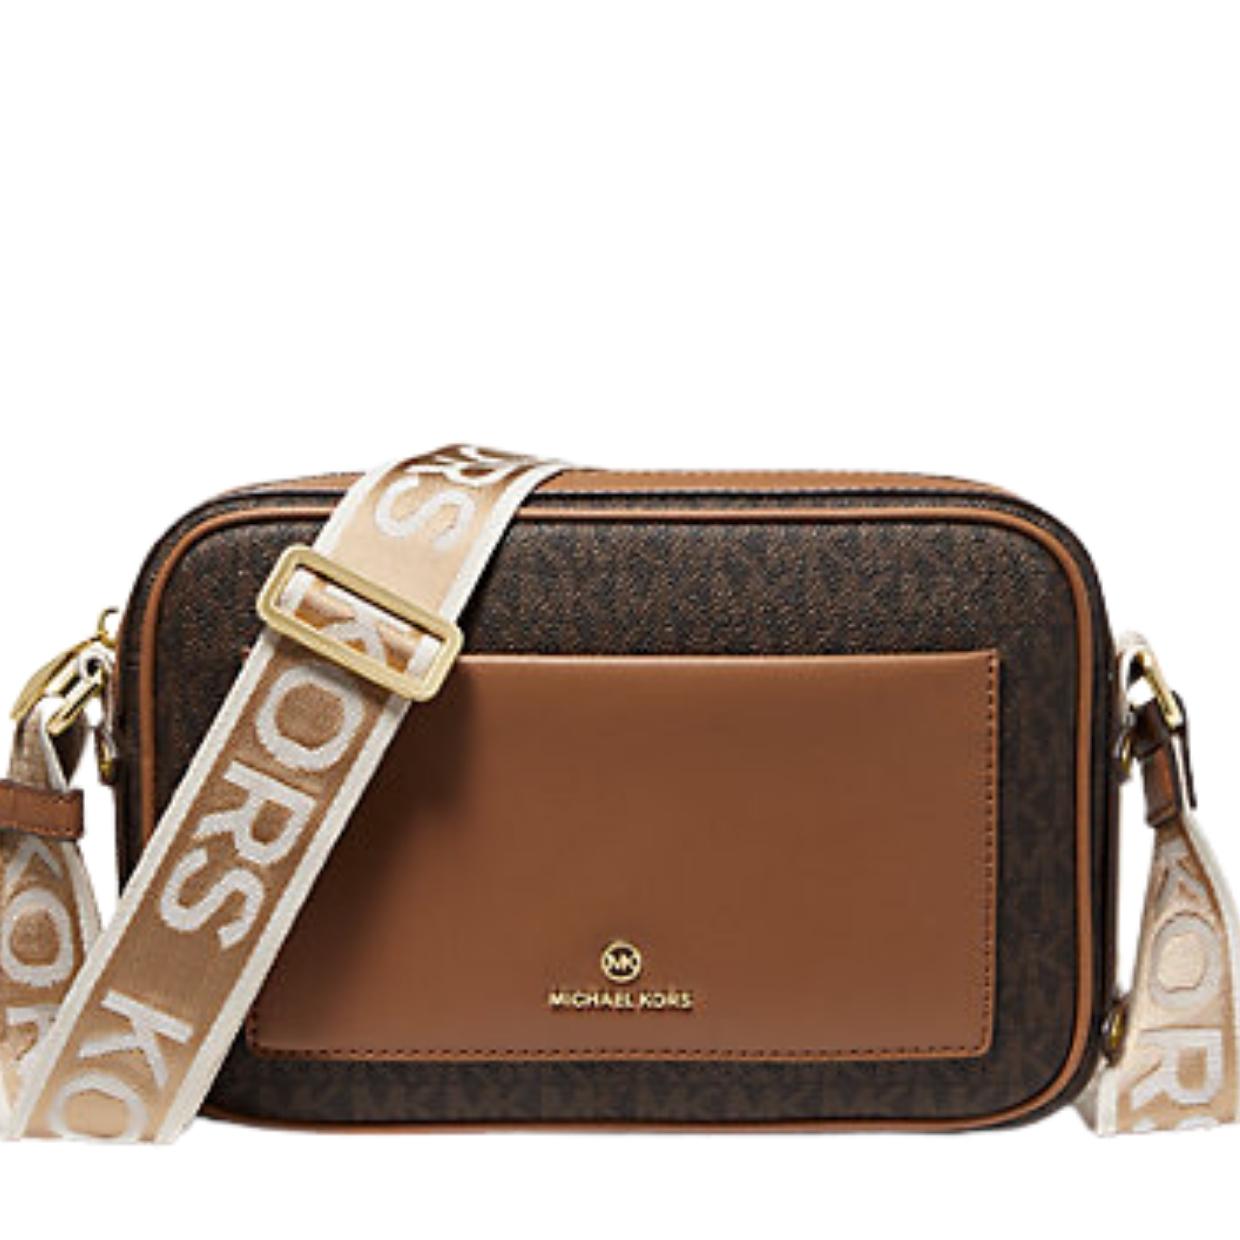 Michael Kors Bedford Medium Pebbled Acorn Leather Tote Handbag Purse New   eBay